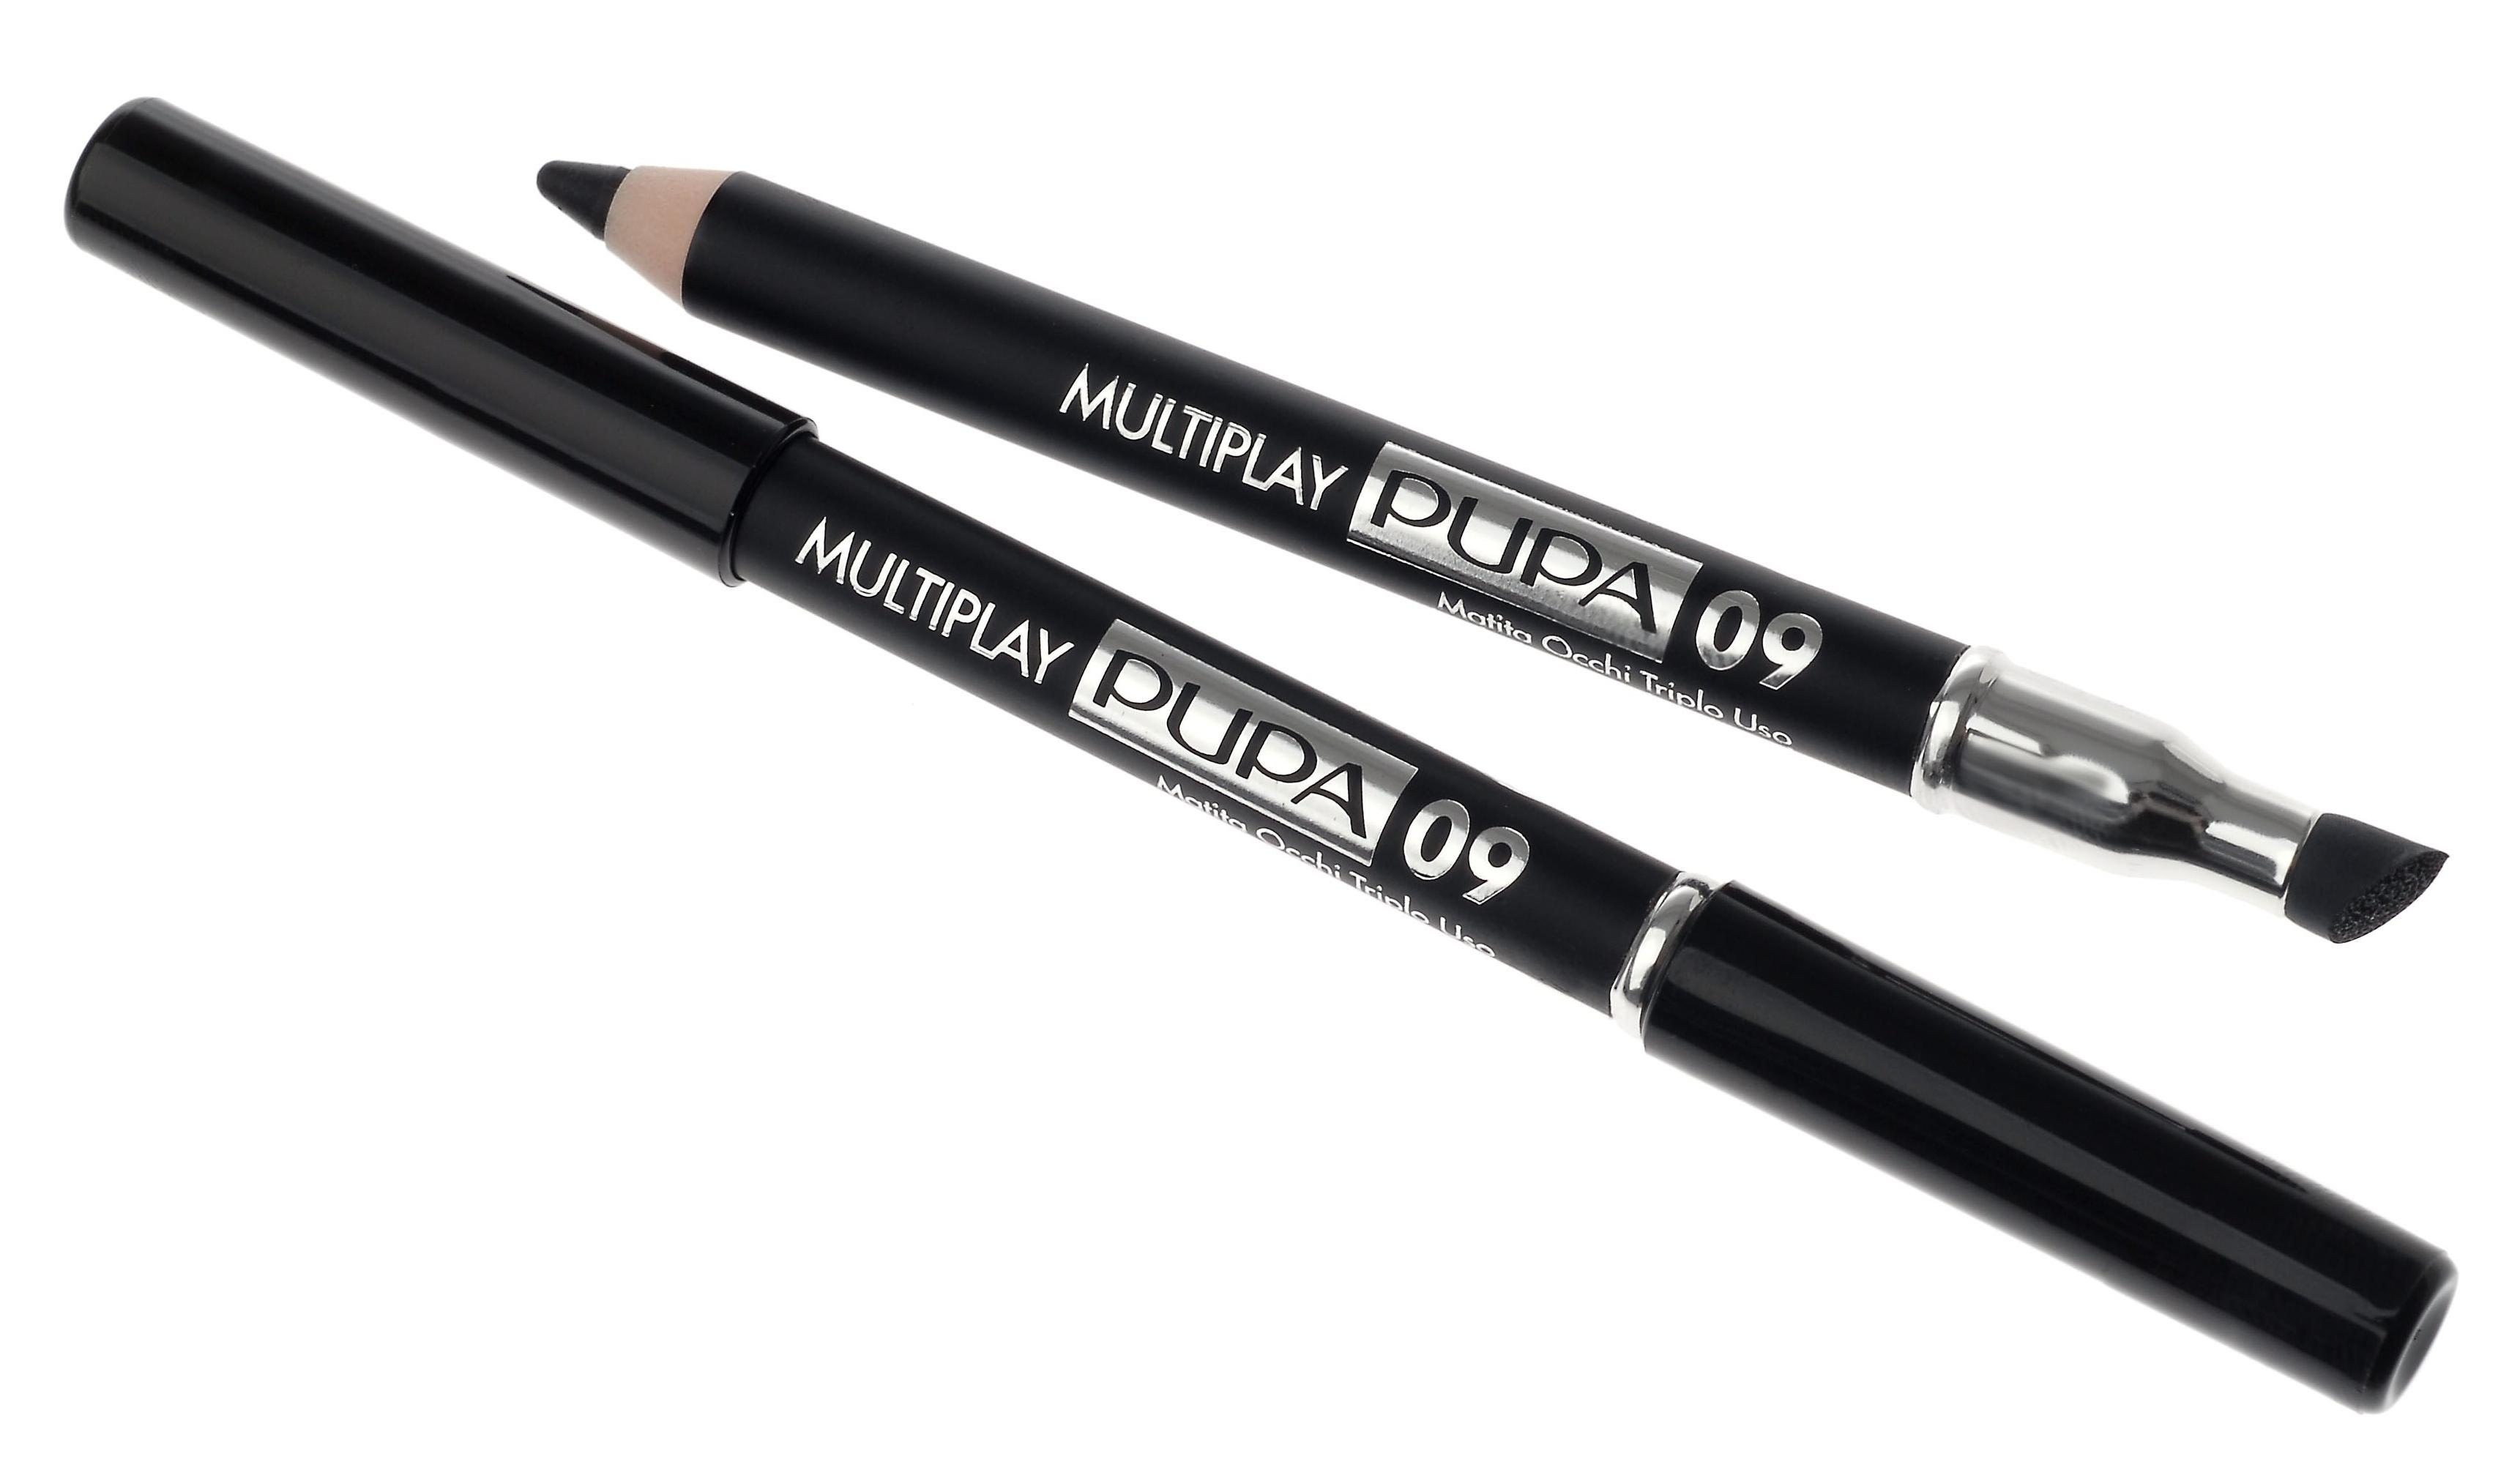 PUPA Карандаш с аппликатором для век 09 / Multiplay Eye Pencil карандаш для век с аппликатором pupa multiplay eye pencil тон 19 durk earth 244019